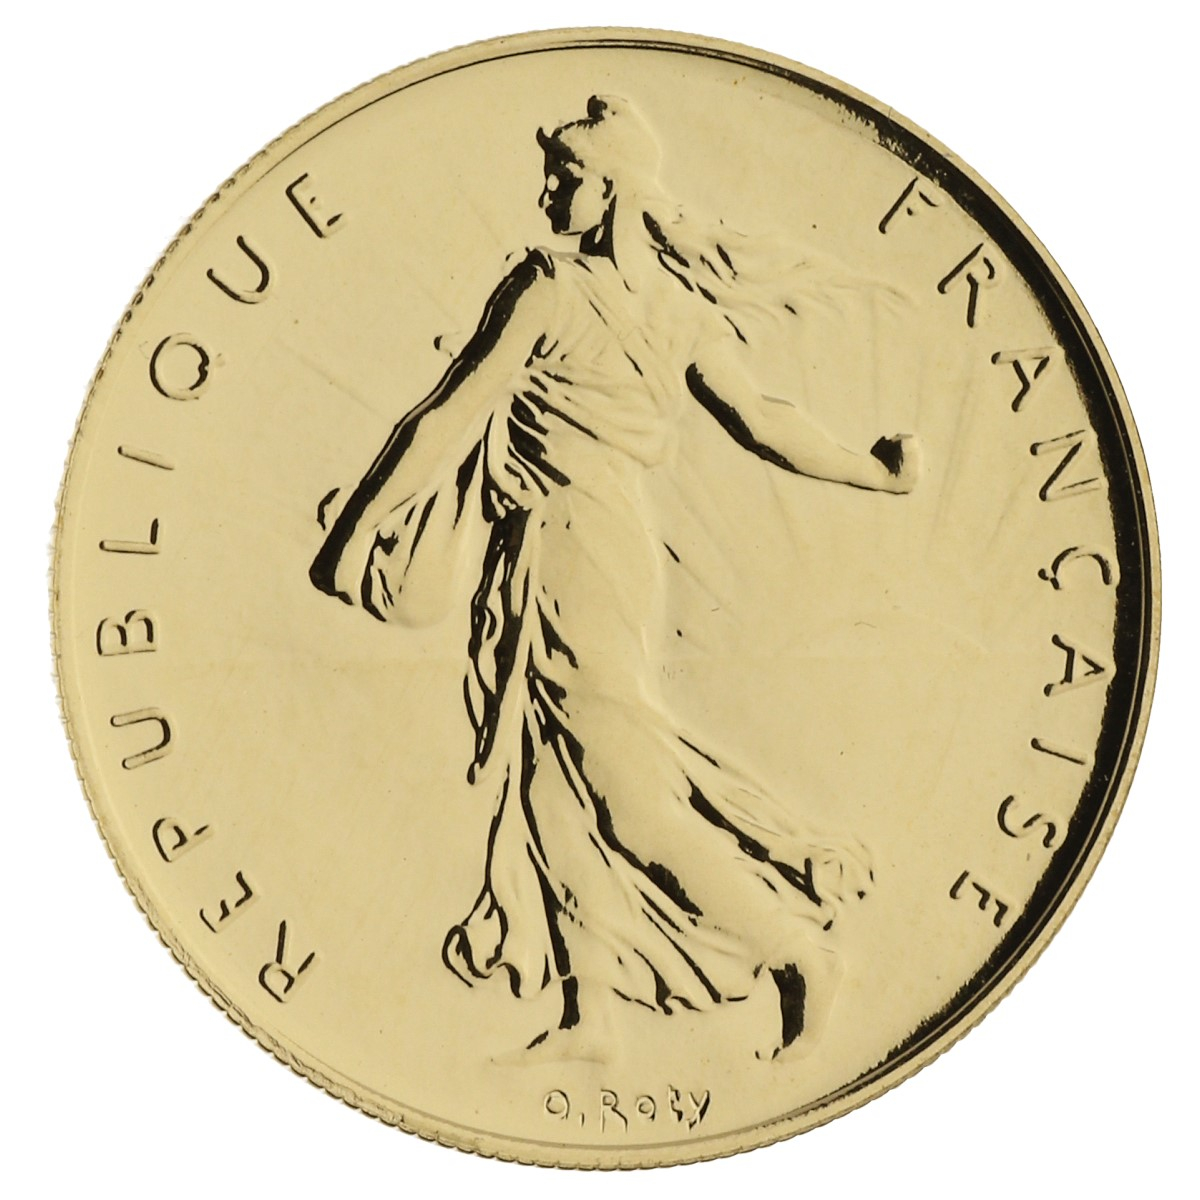 1 Franc - France - 2001